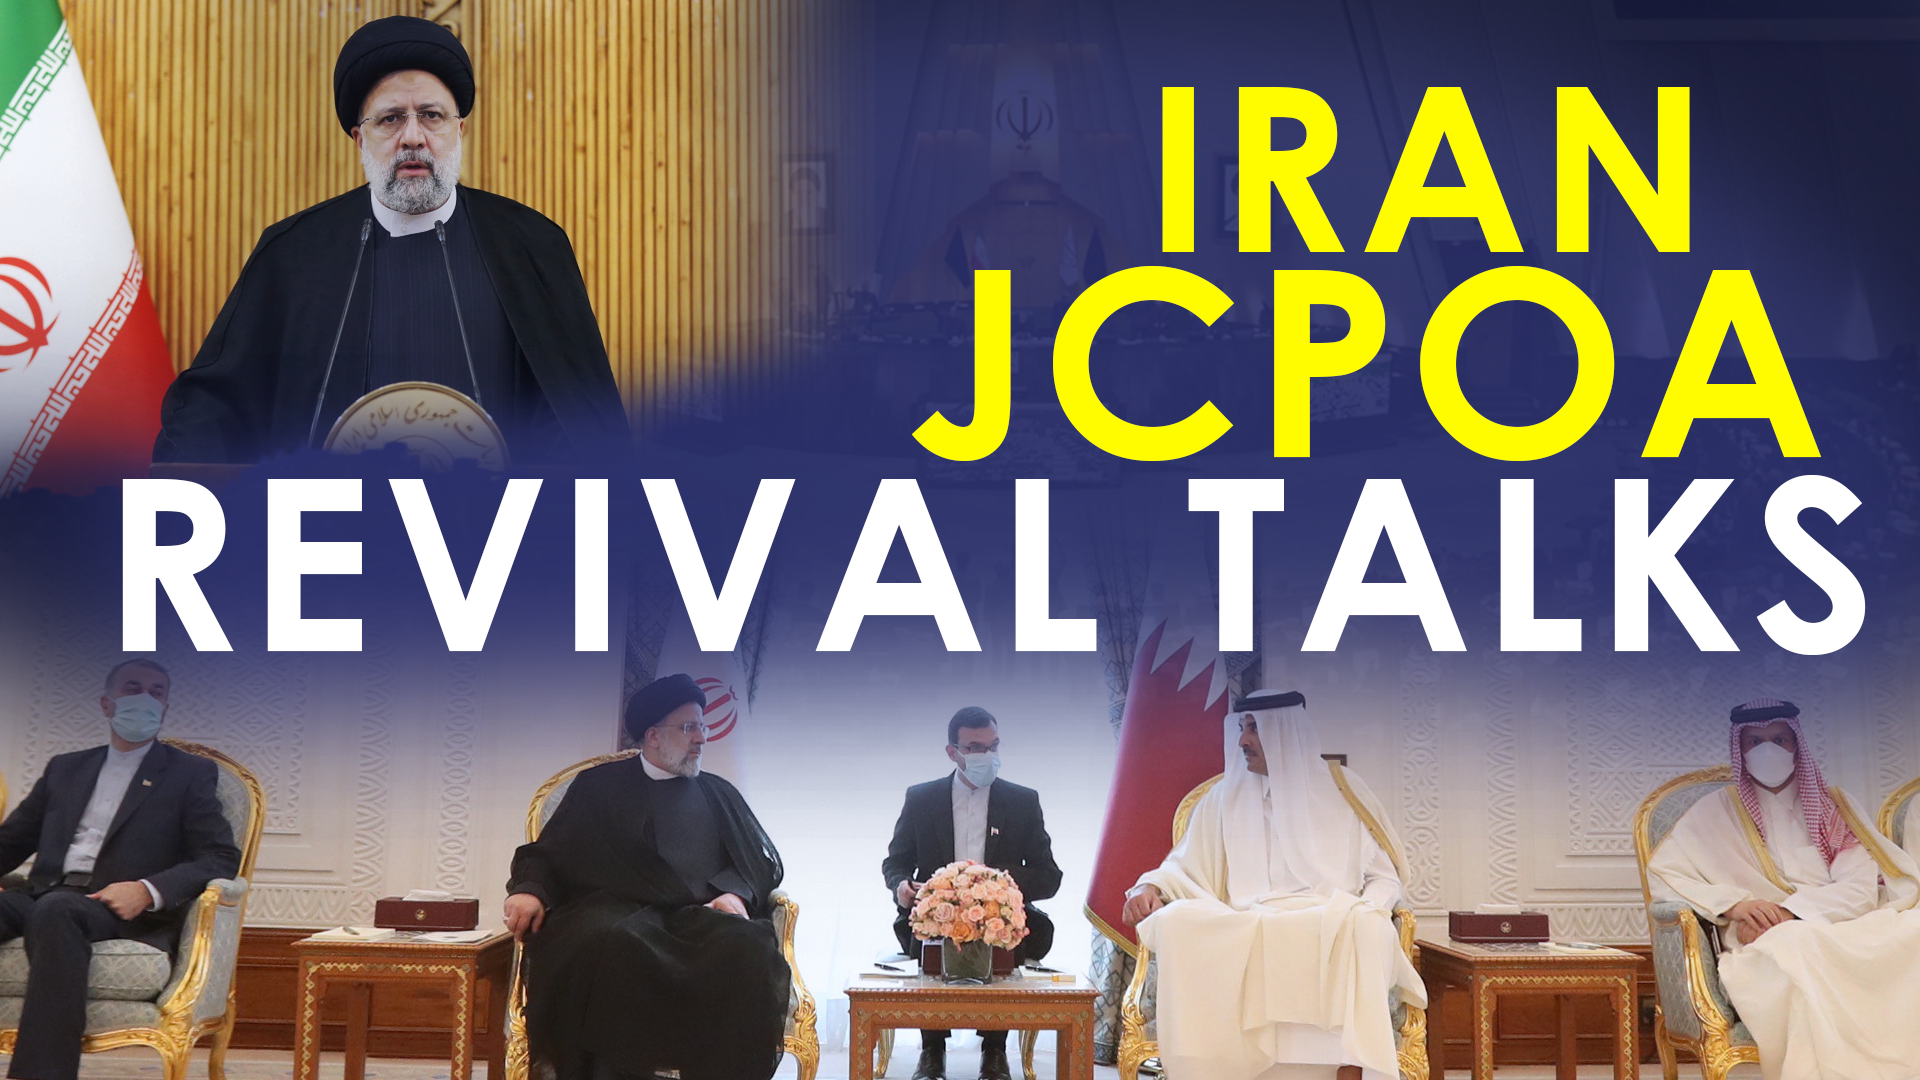 JCPOA revival talks